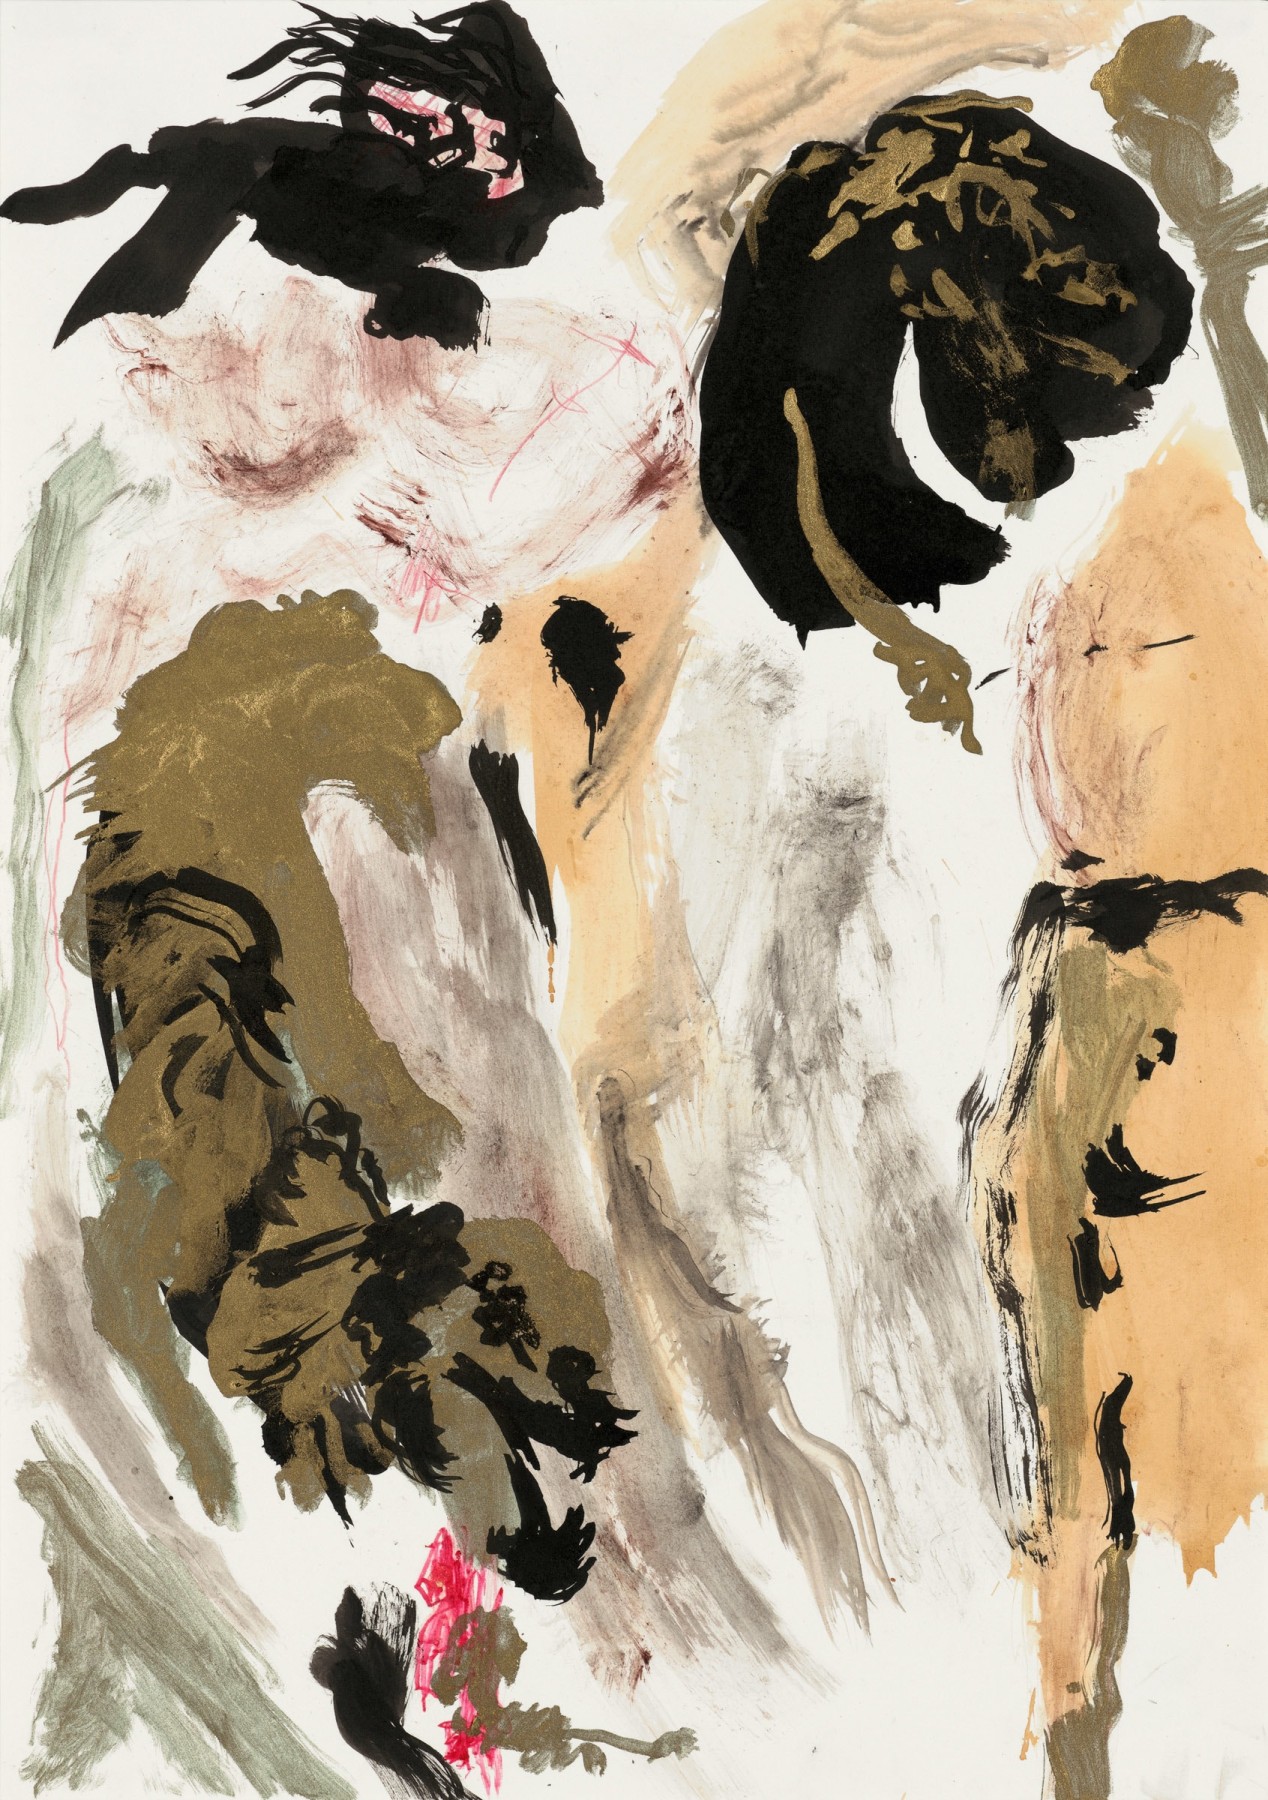 Don Van Vliet

&amp;ldquo;Untitled&amp;rdquo;, 1989

India ink, gouache, colored pencil, gold pigment on paper

20 x 13 1/2 inches

51 x 34 cm

VLZ 320